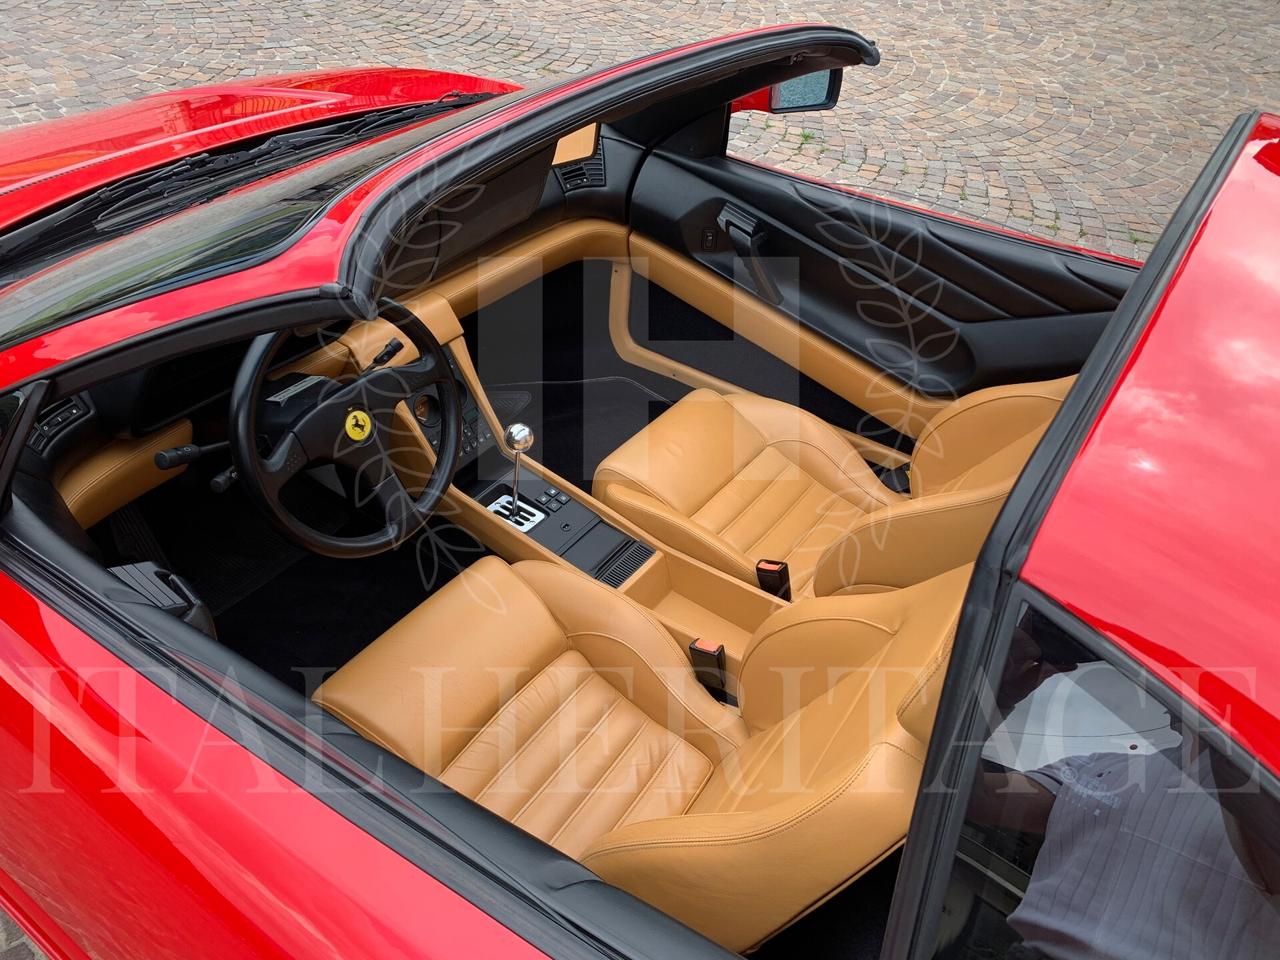 Ferrari 348 ts cat